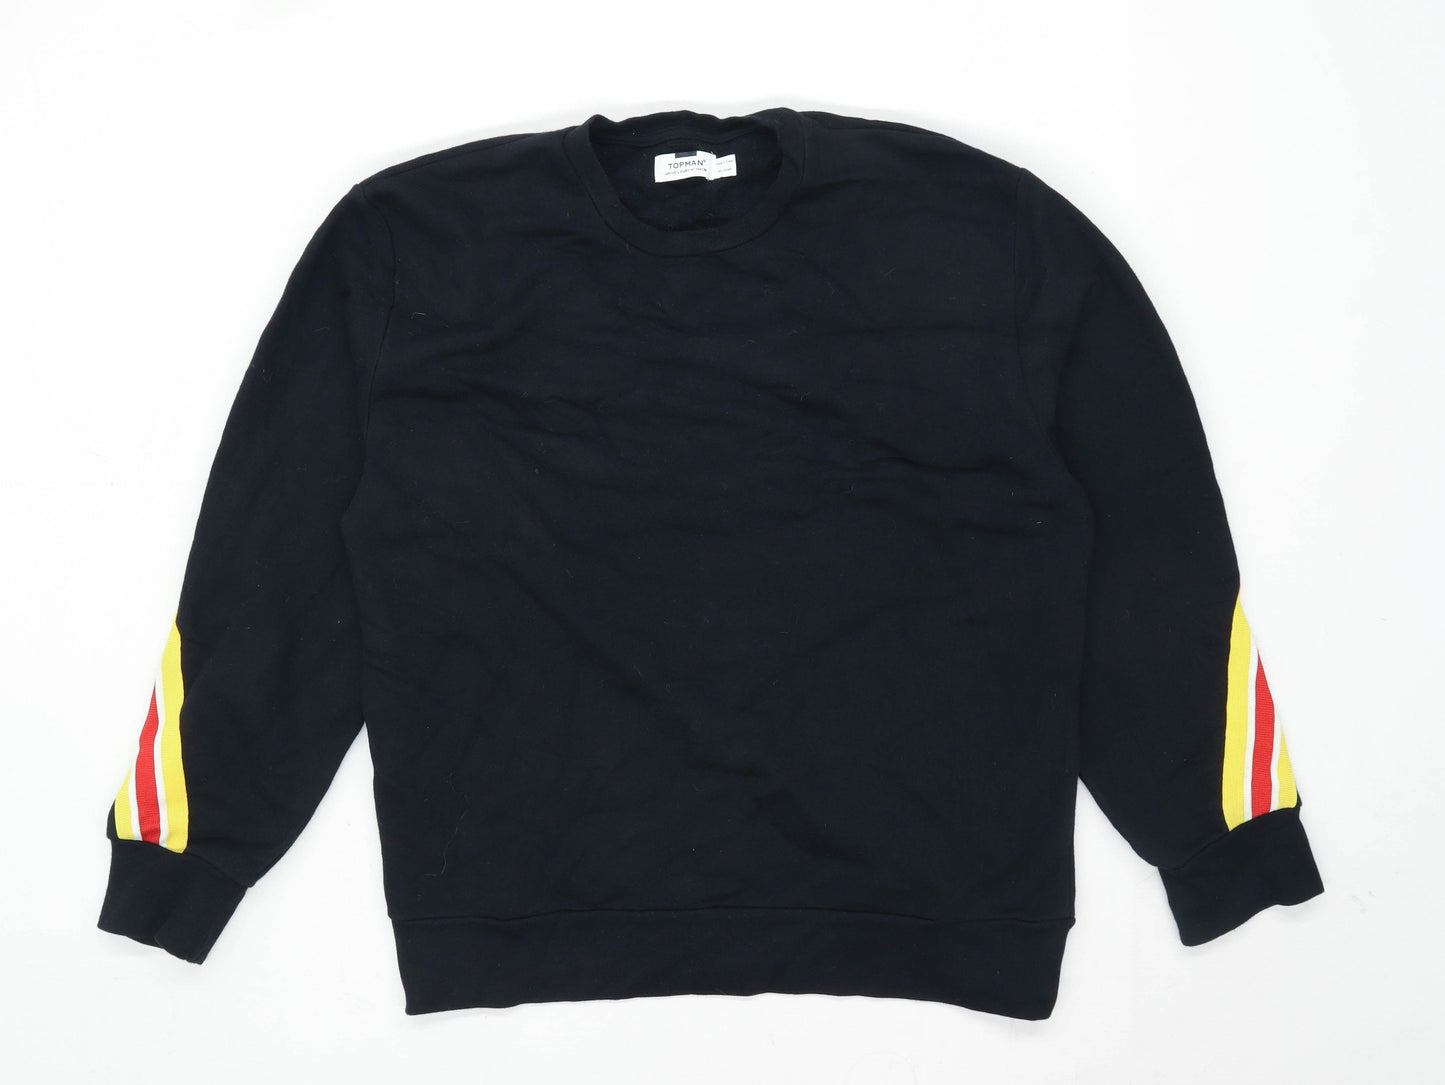 Topman Mens Size L Cotton Blend Black Sweatshirt